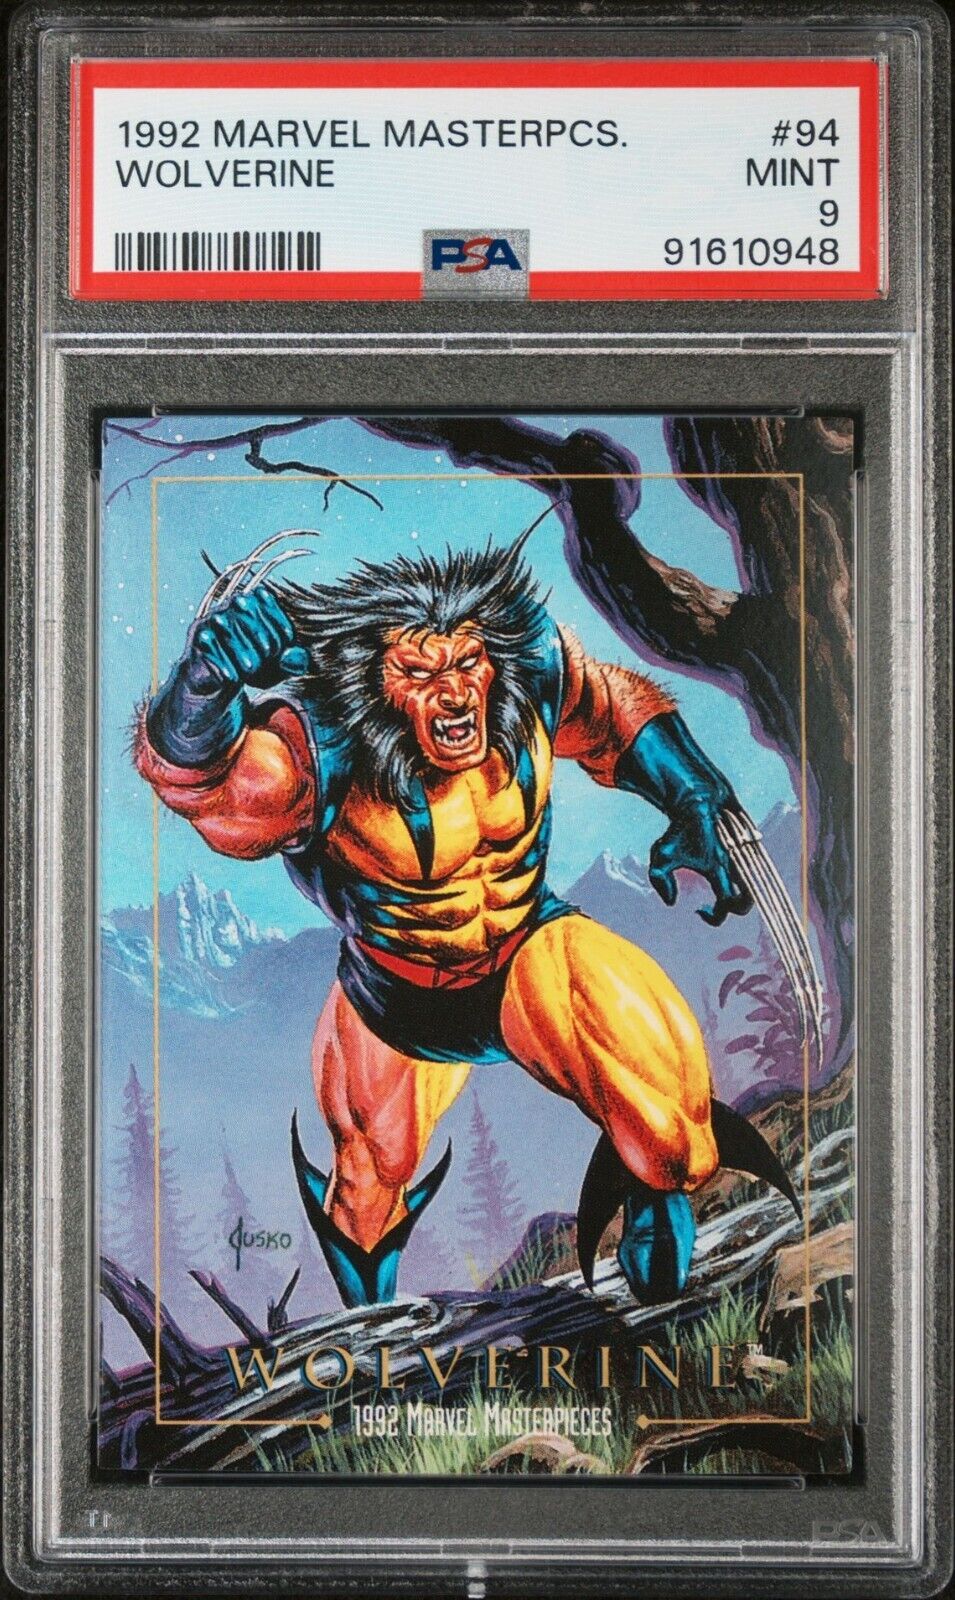 Wolverine 1992 Marvel Masterpieces #94 Jusko MCU PSA 9 MINT